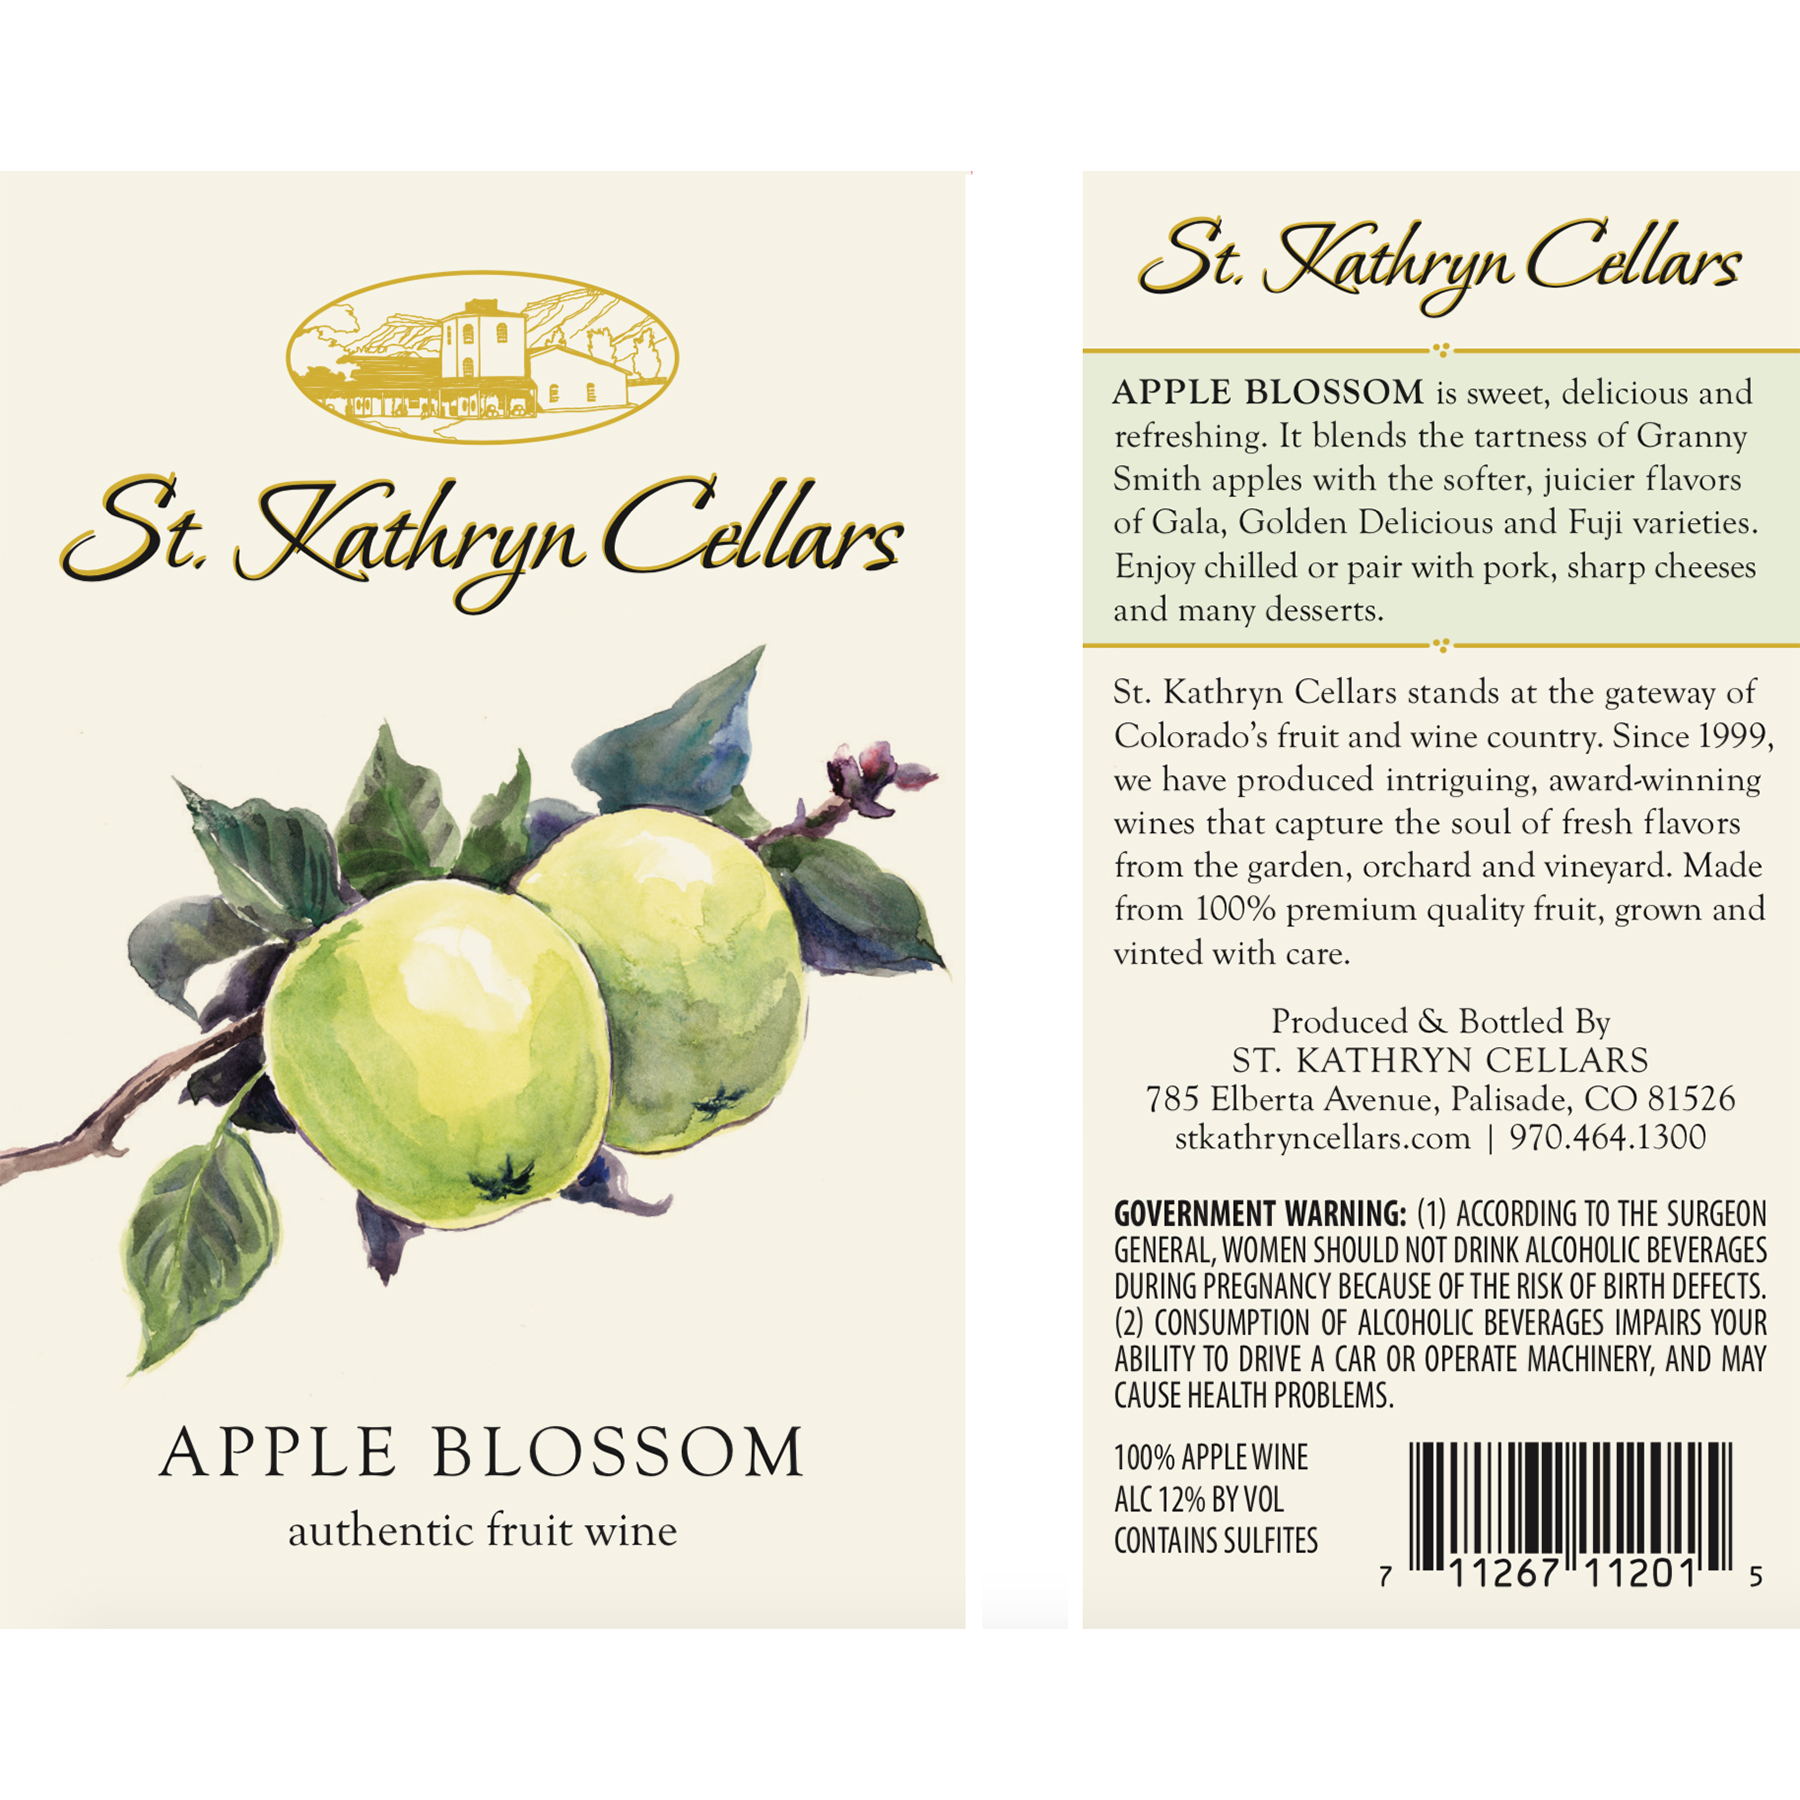 St. Kathryn Cellars label